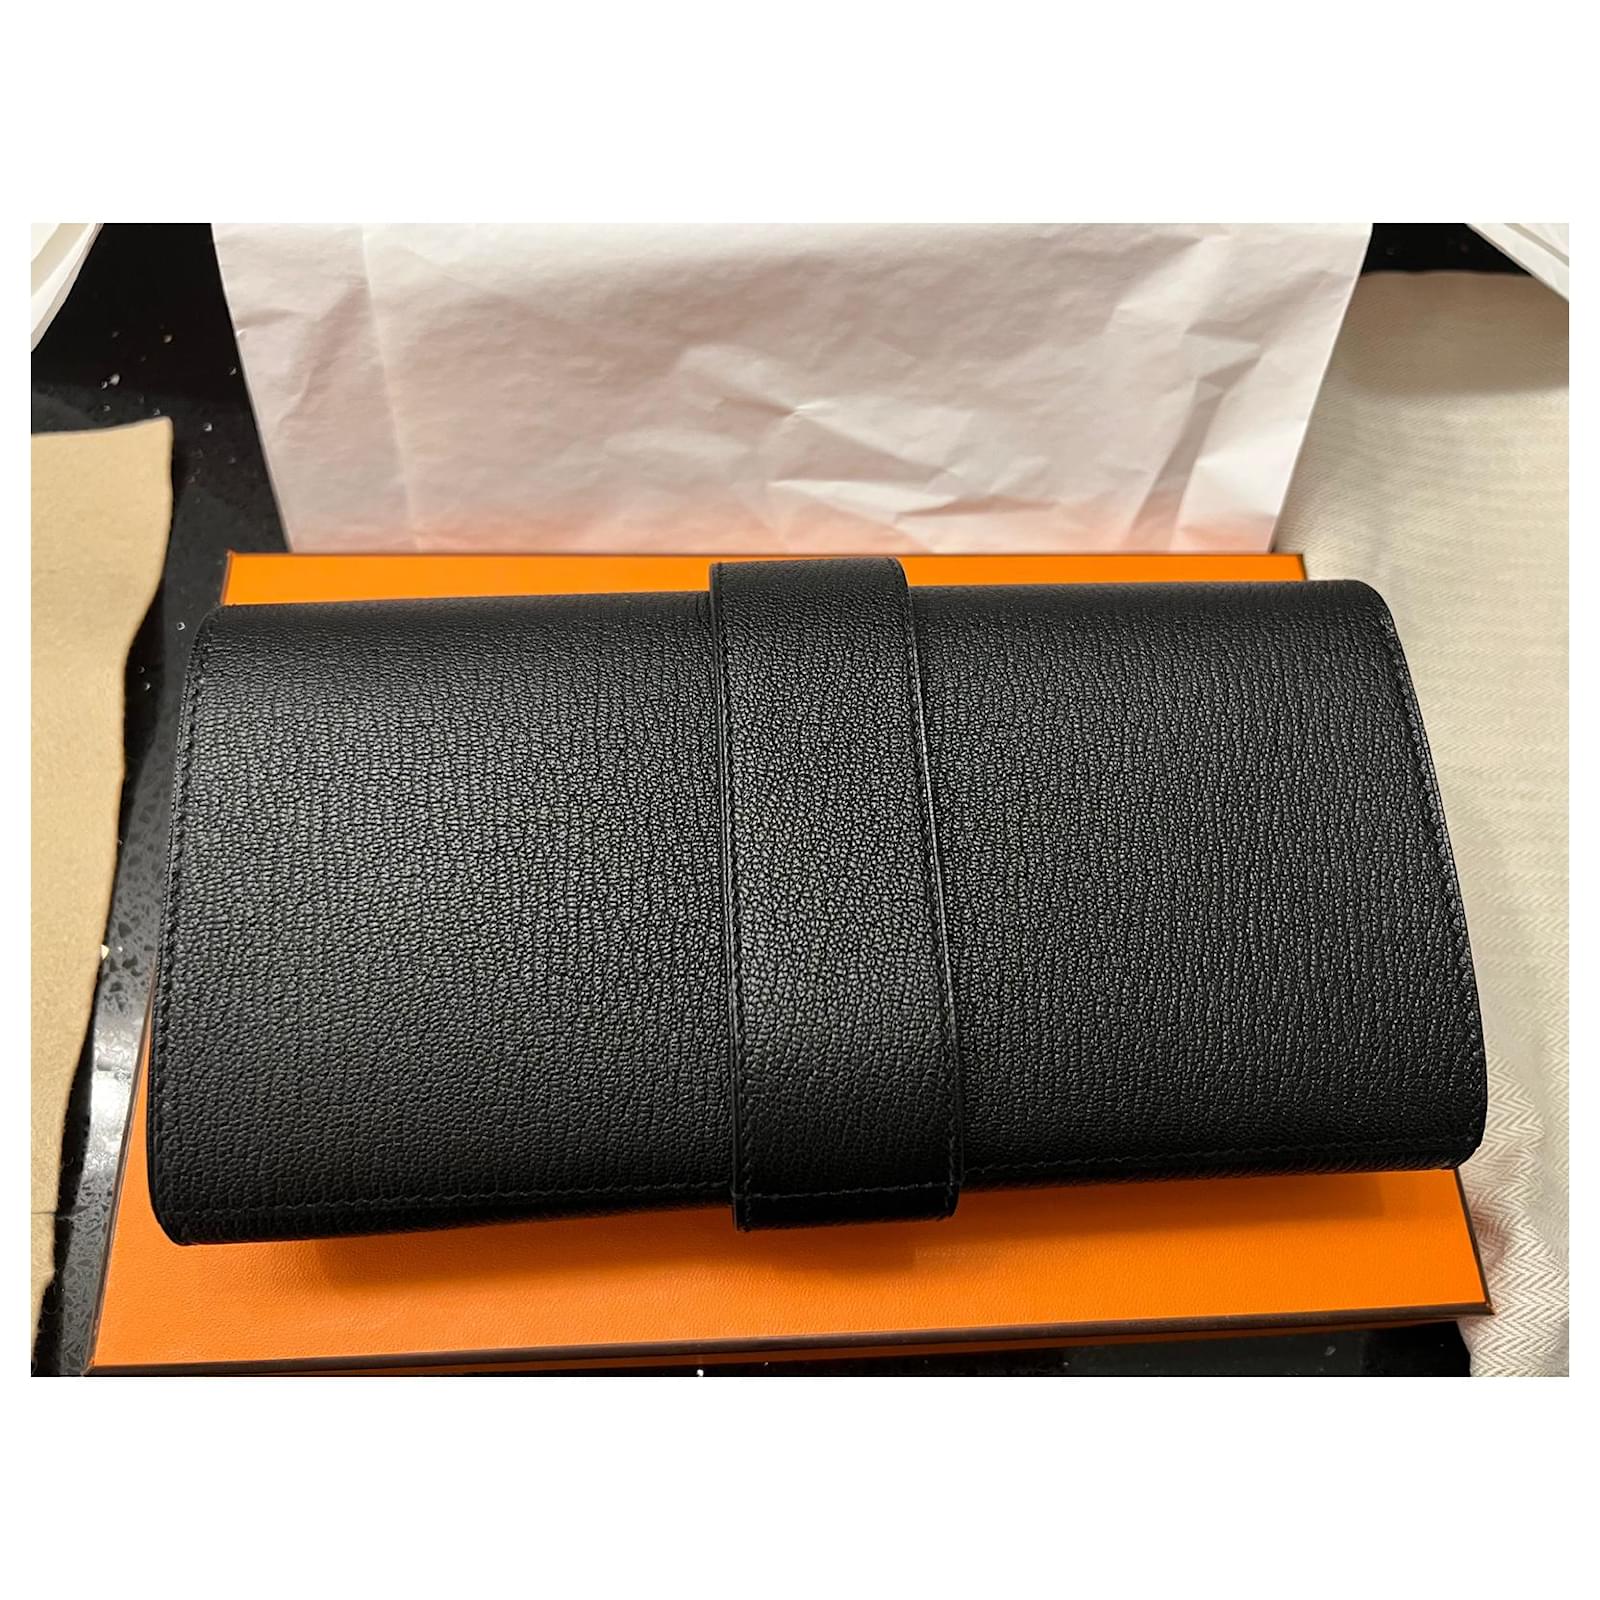 Hermes Medor 23 Clutch Black Box Leather Gold Hardware – Coco